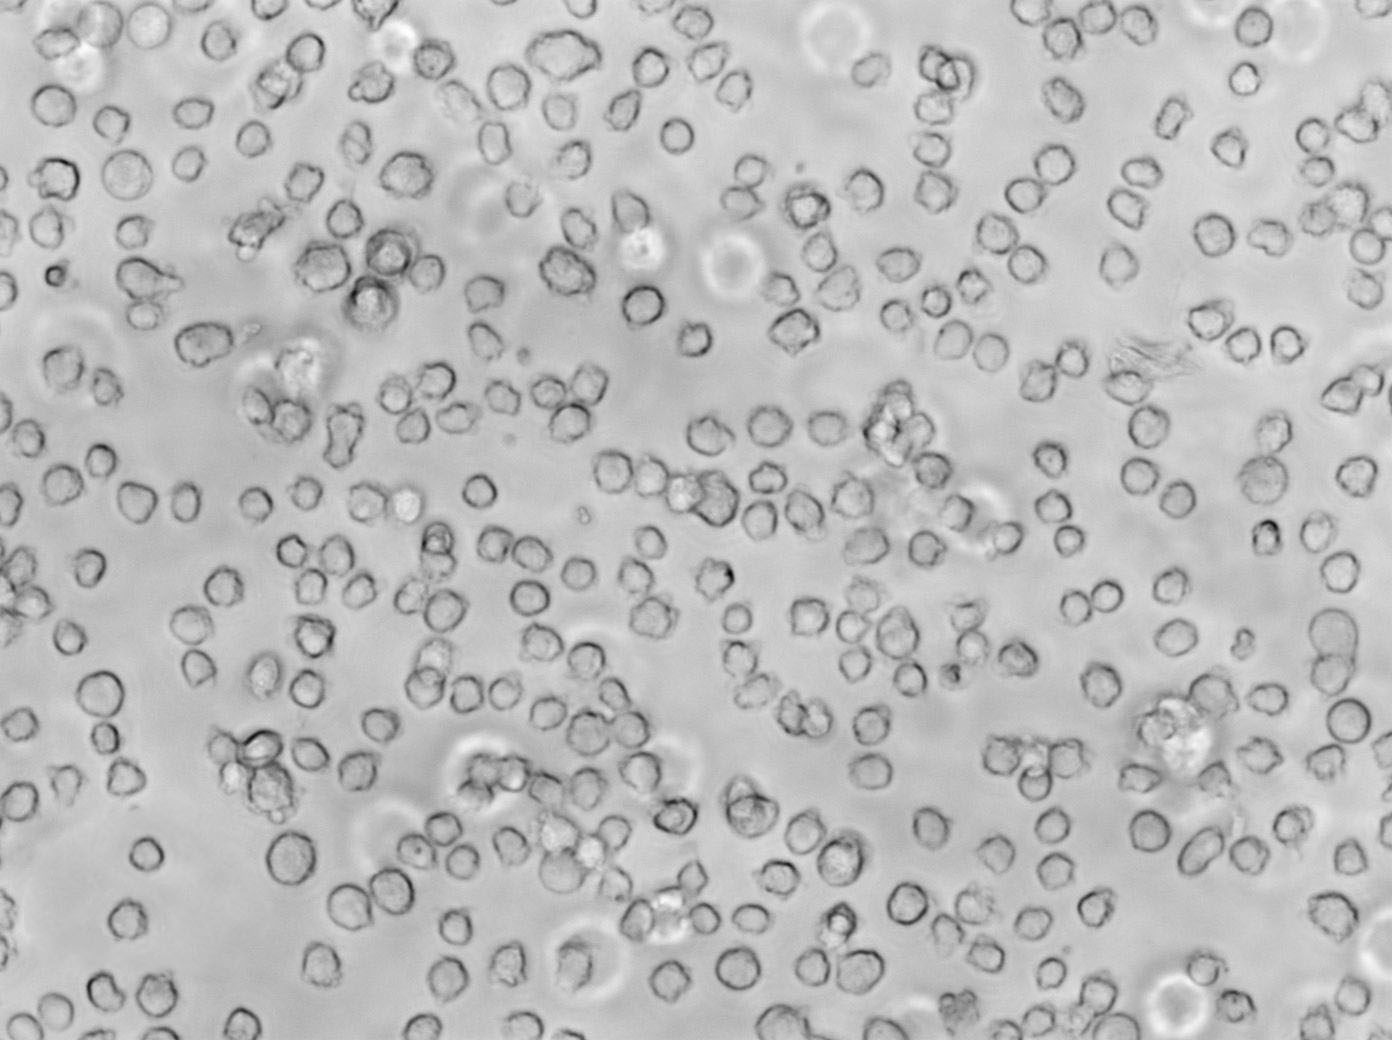 Jurkat Cell|人急性T淋巴细胞白血病细胞,Jurkat Cell